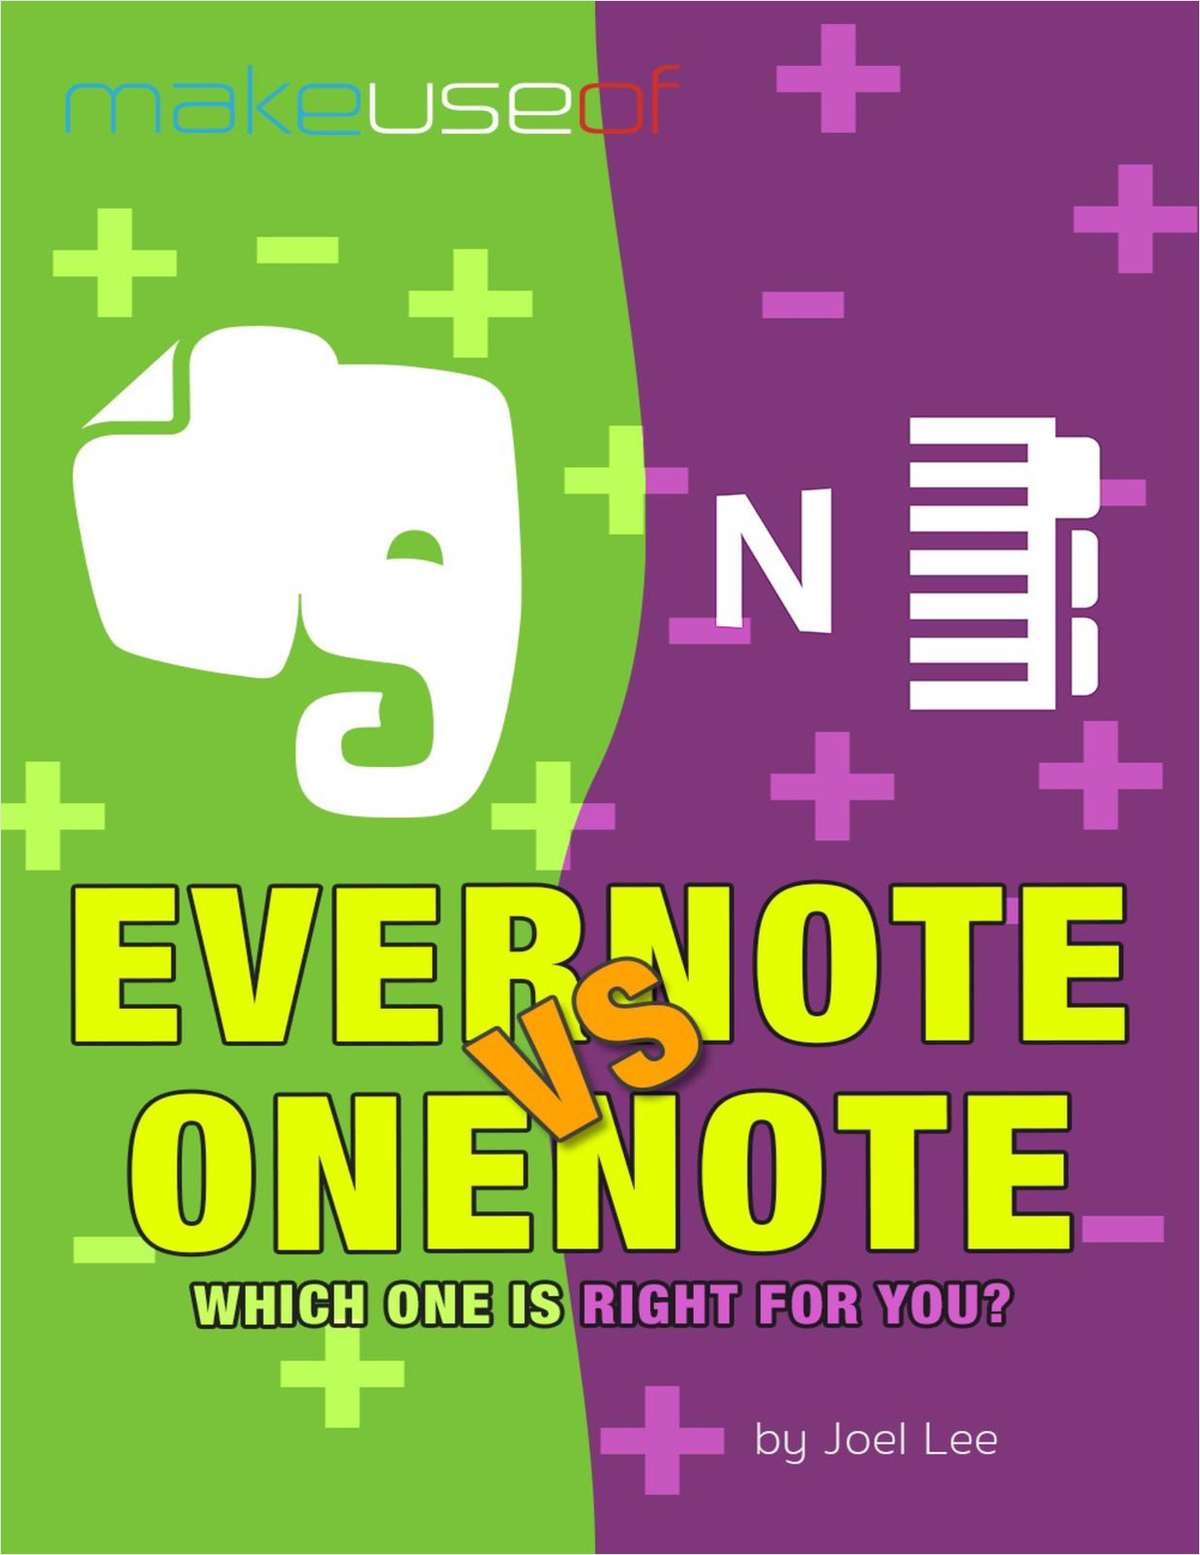 evernote vs onenote